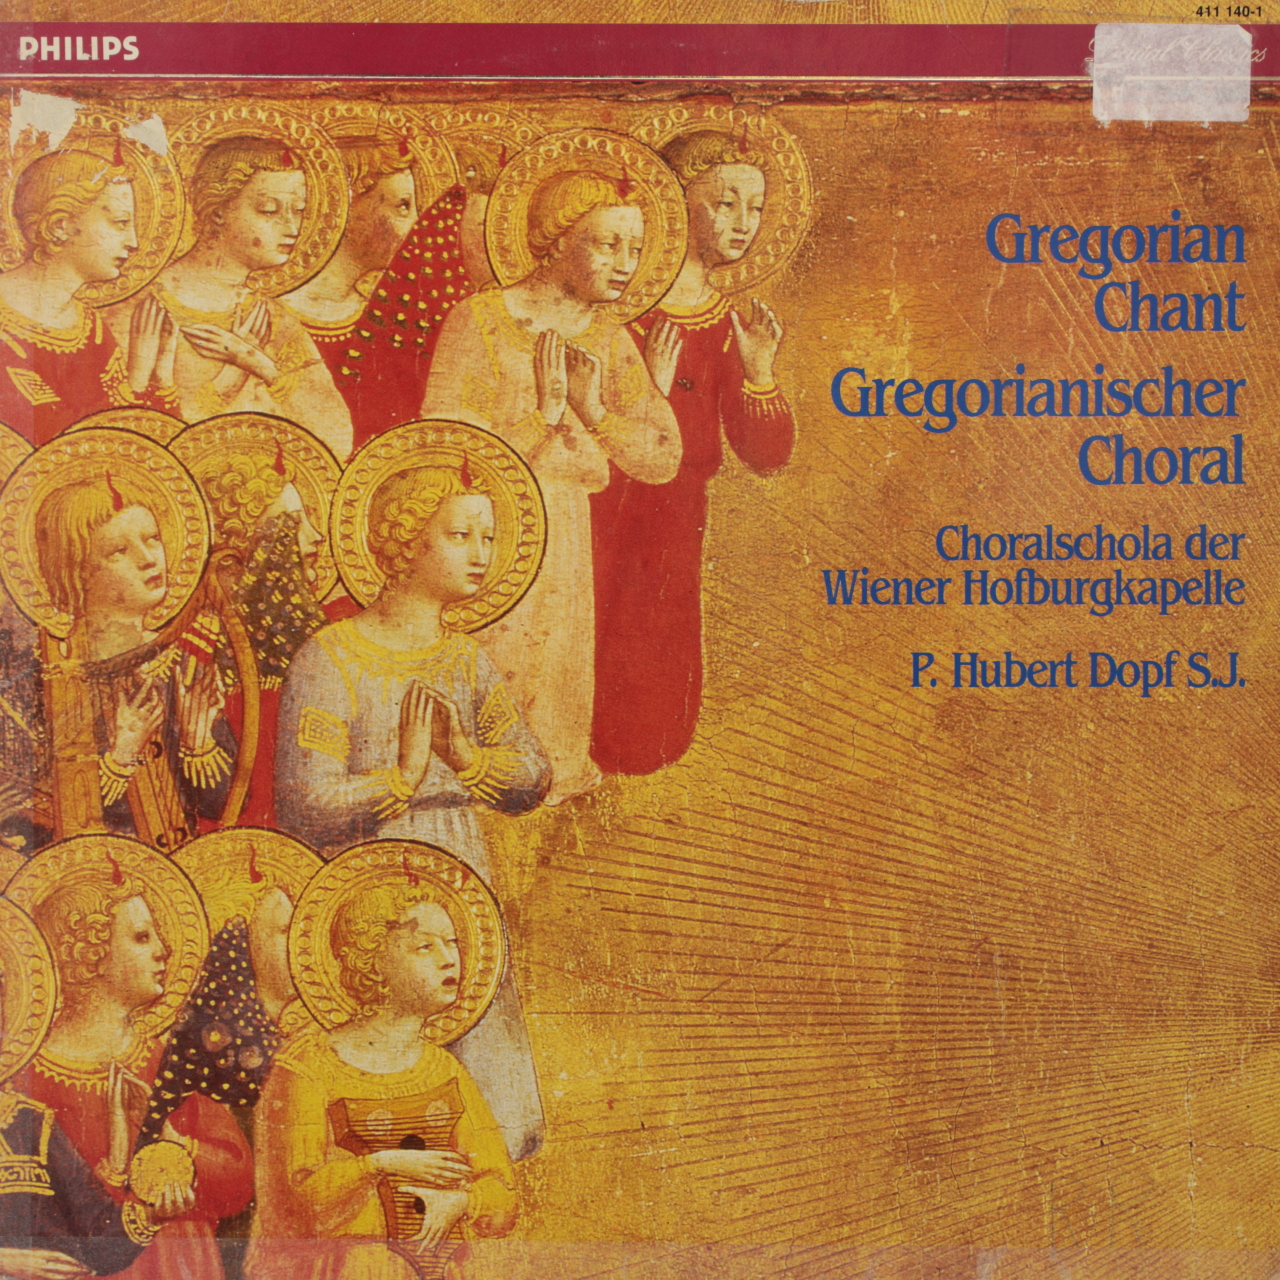 Gregorian Chant - Gregorianischer choral